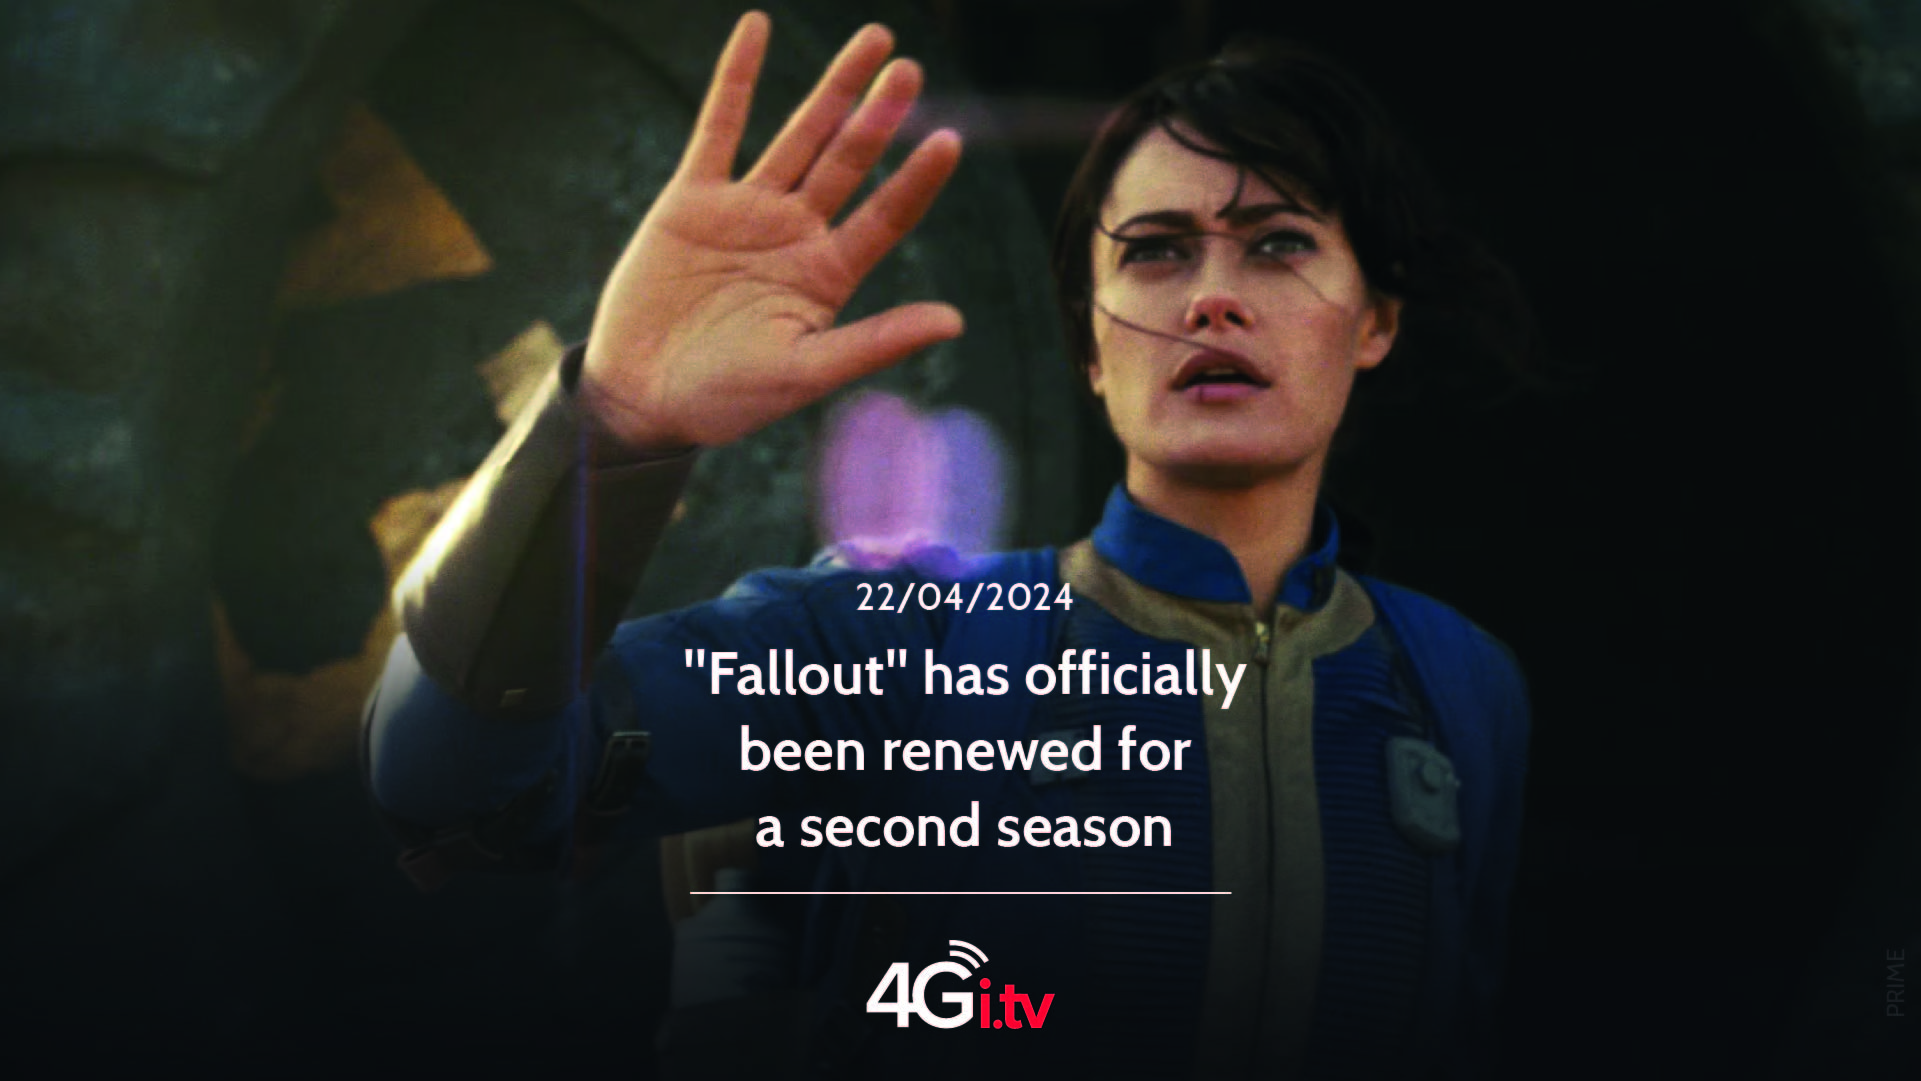 Lesen Sie mehr über den Artikel “Fallout” has officially been renewed for a second season 